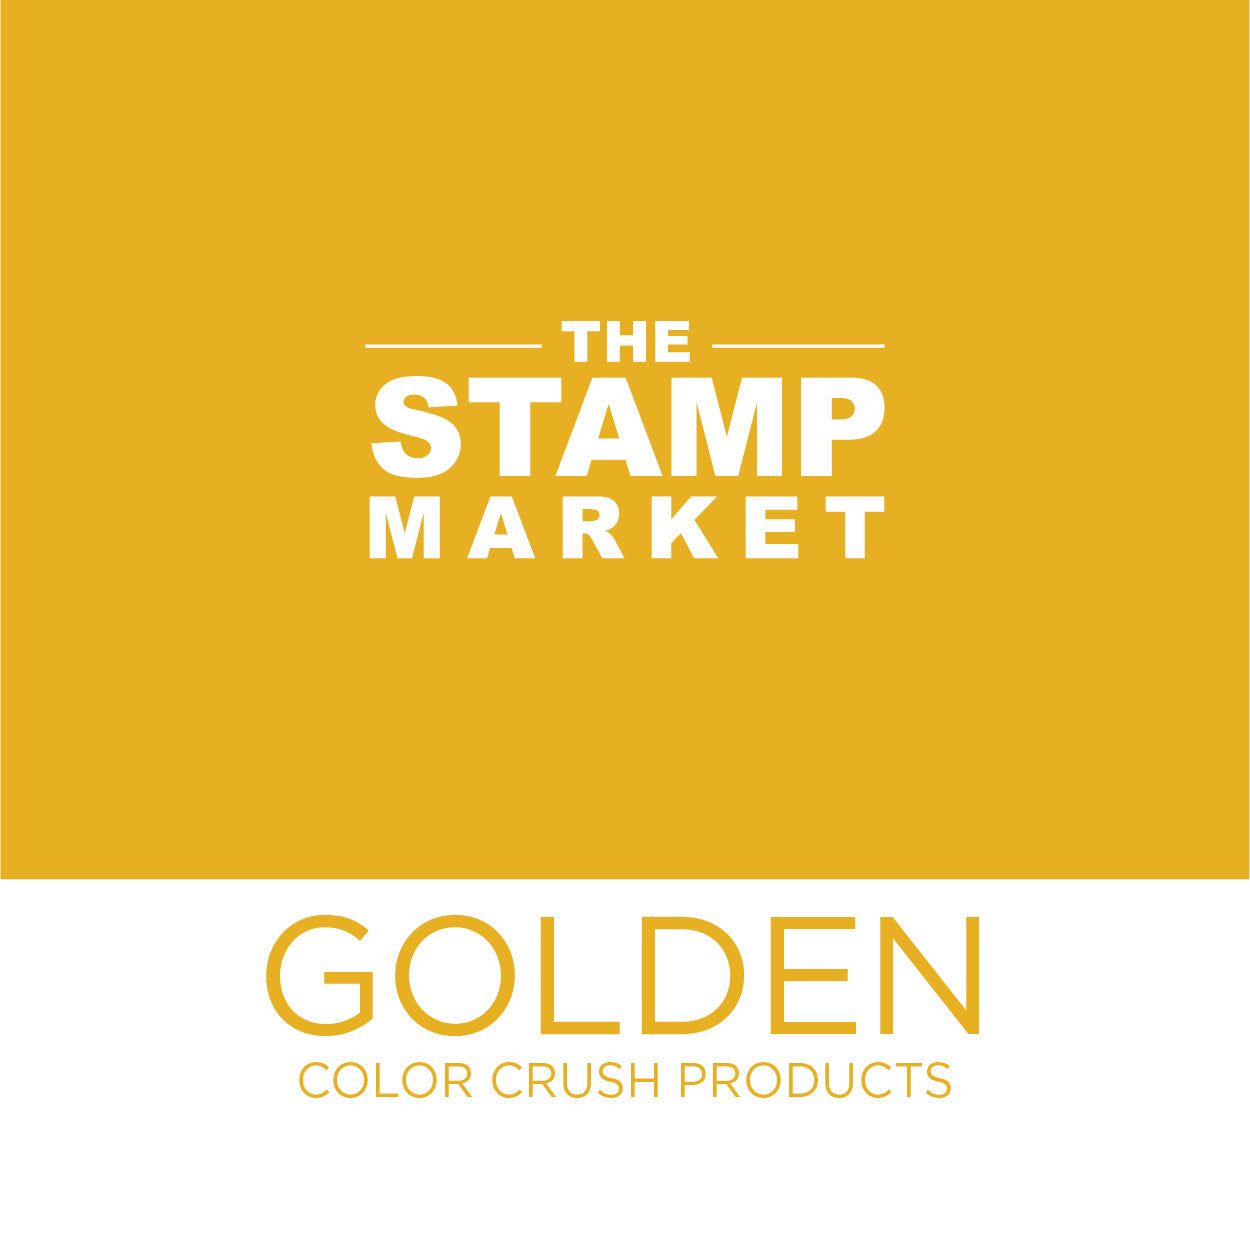 GOLDEN RIBBON 5/8 – The Stamp Market